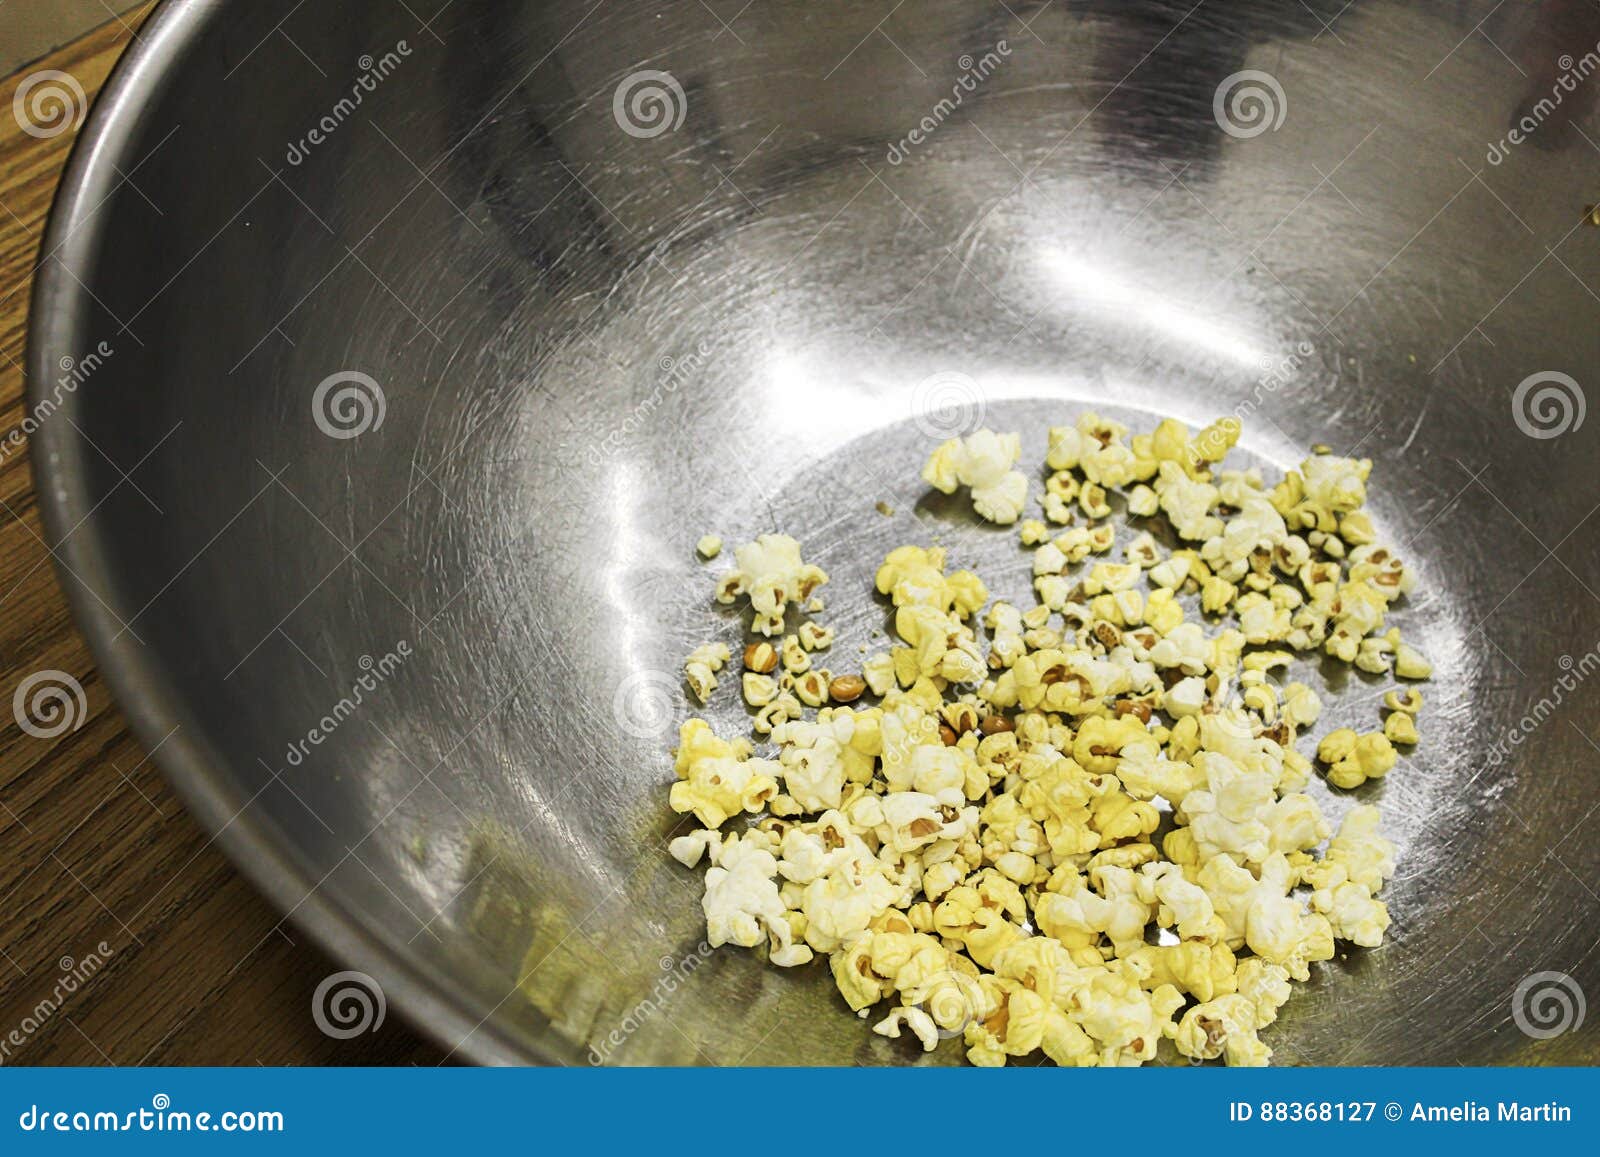 [Image: empty-metal-popcorn-bowl-88368127.jpg]